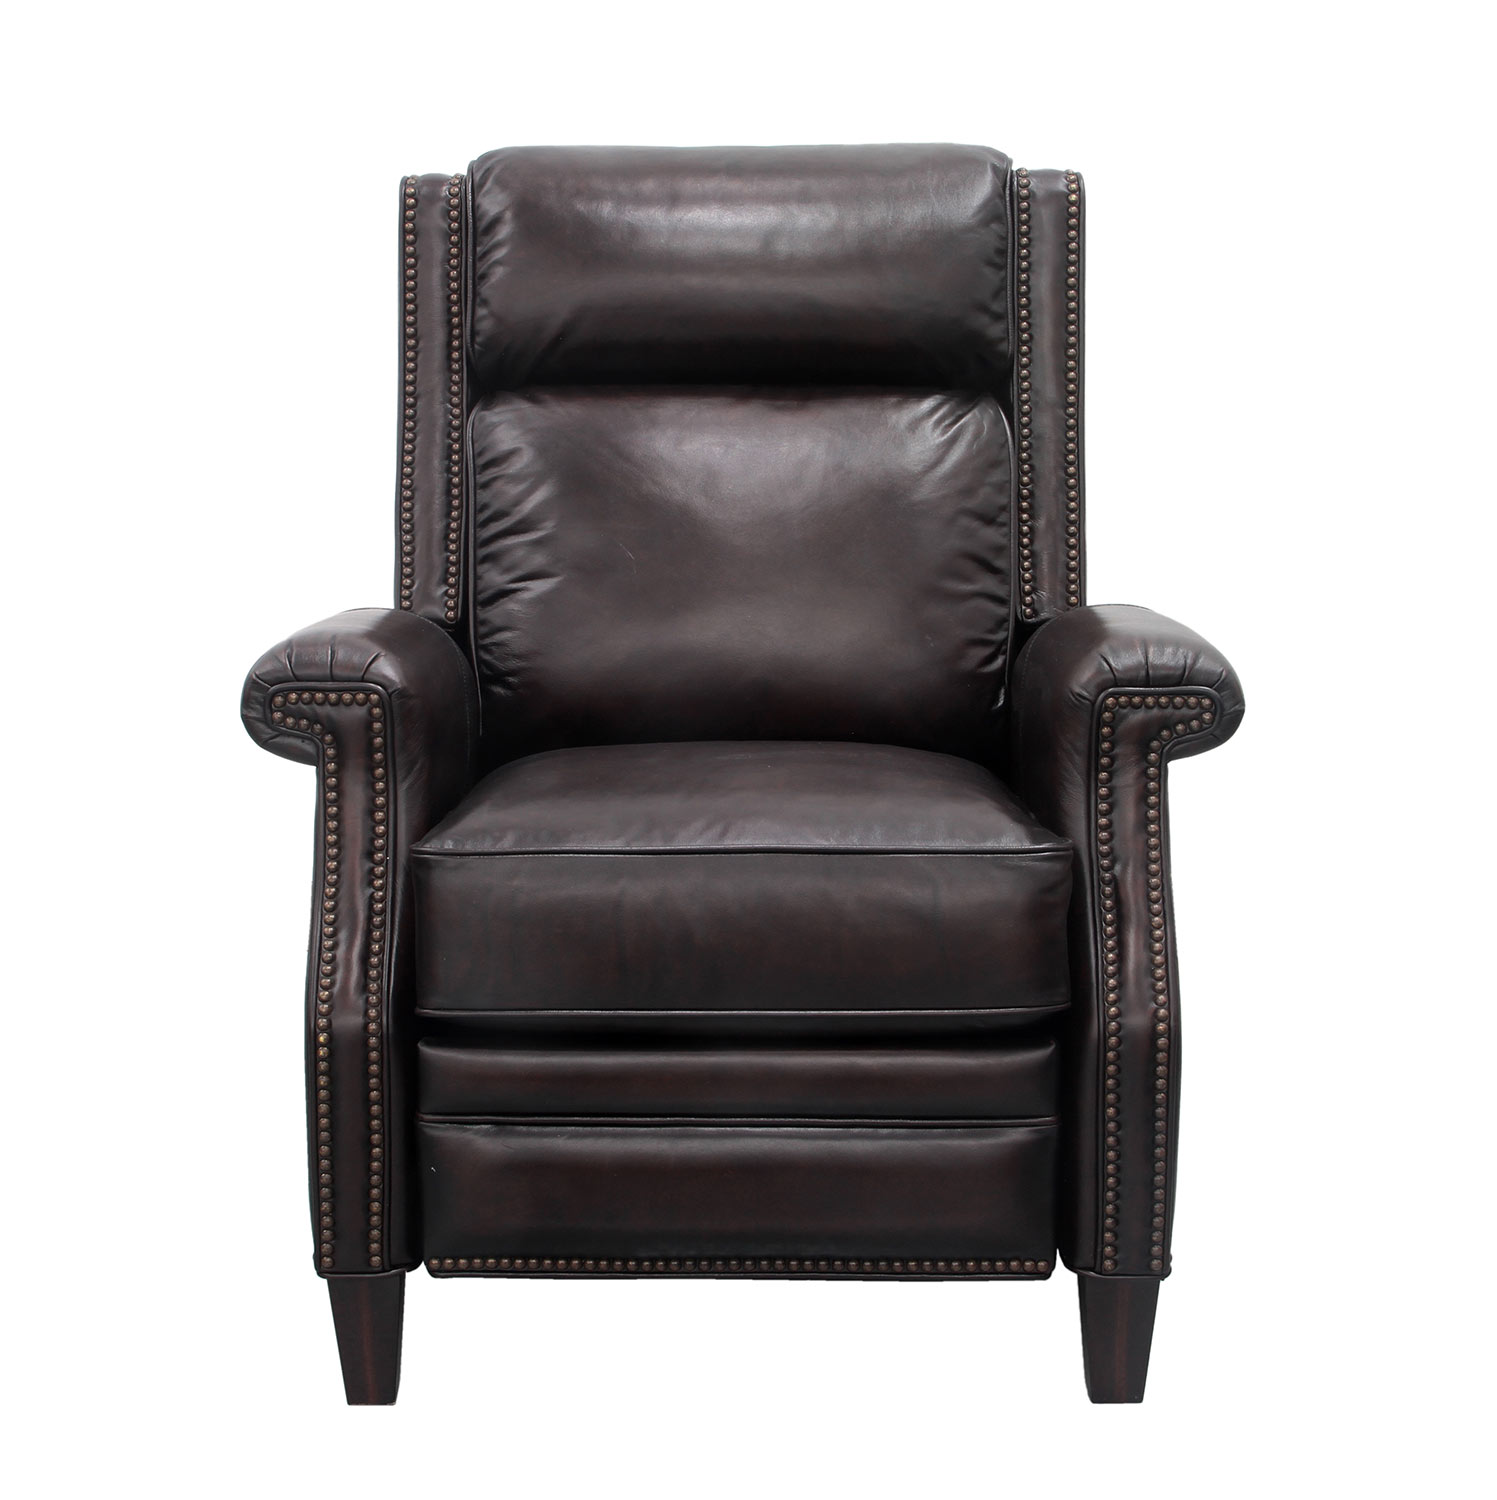 Barcalounger Barrett Power Recliner Chair with Power Headrest - Stetson Coffee/All Leather